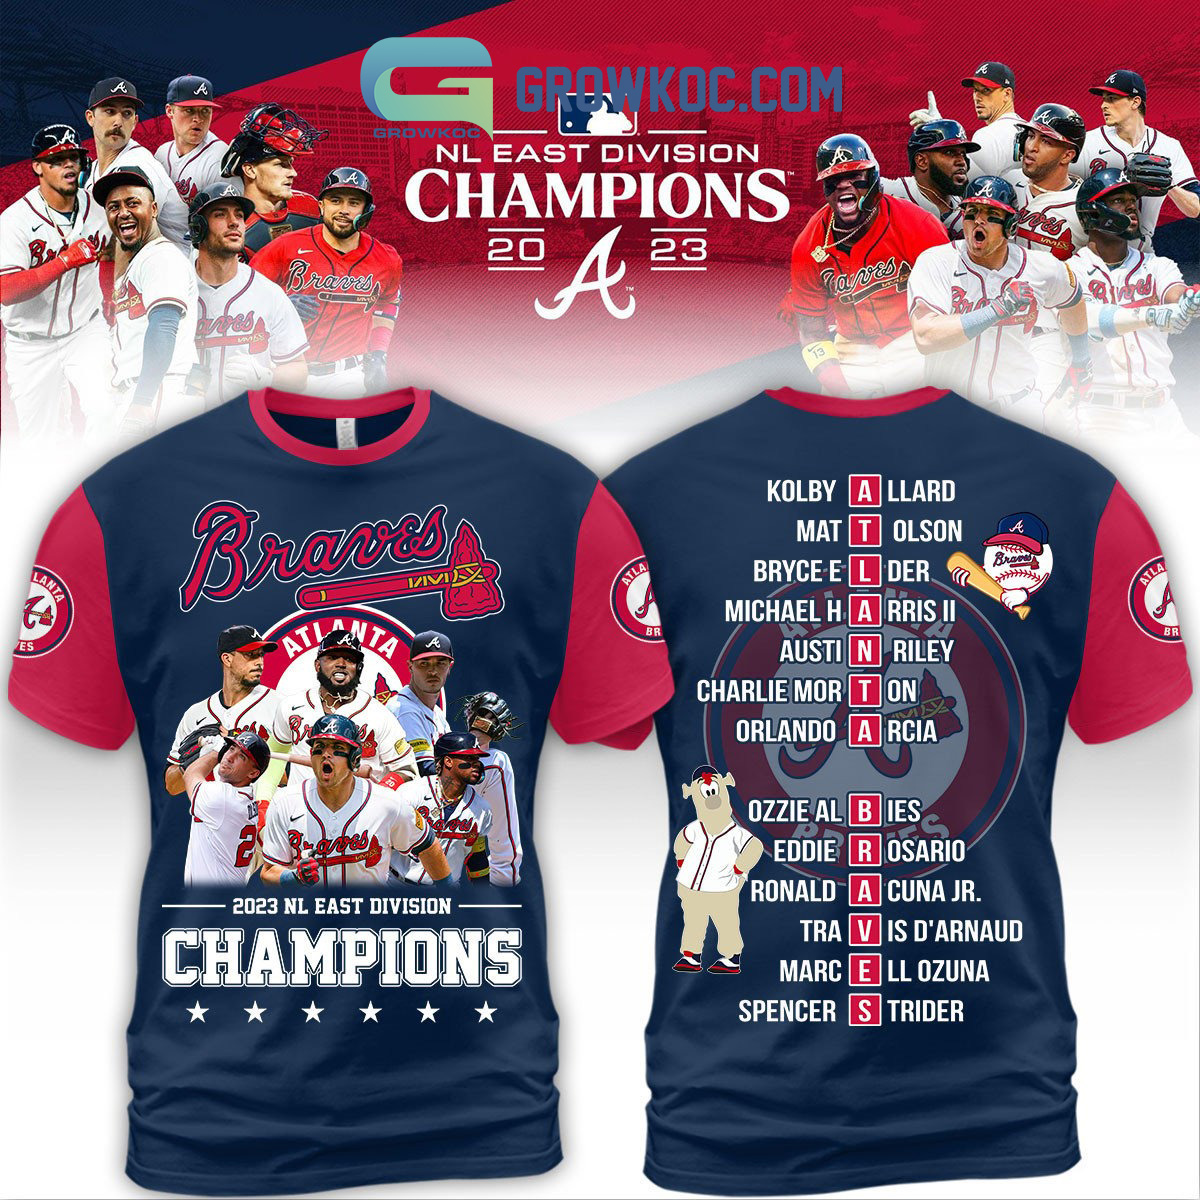 Atlanta Braves 2023 NL East Division Champions Baseball Jersey - Growkoc